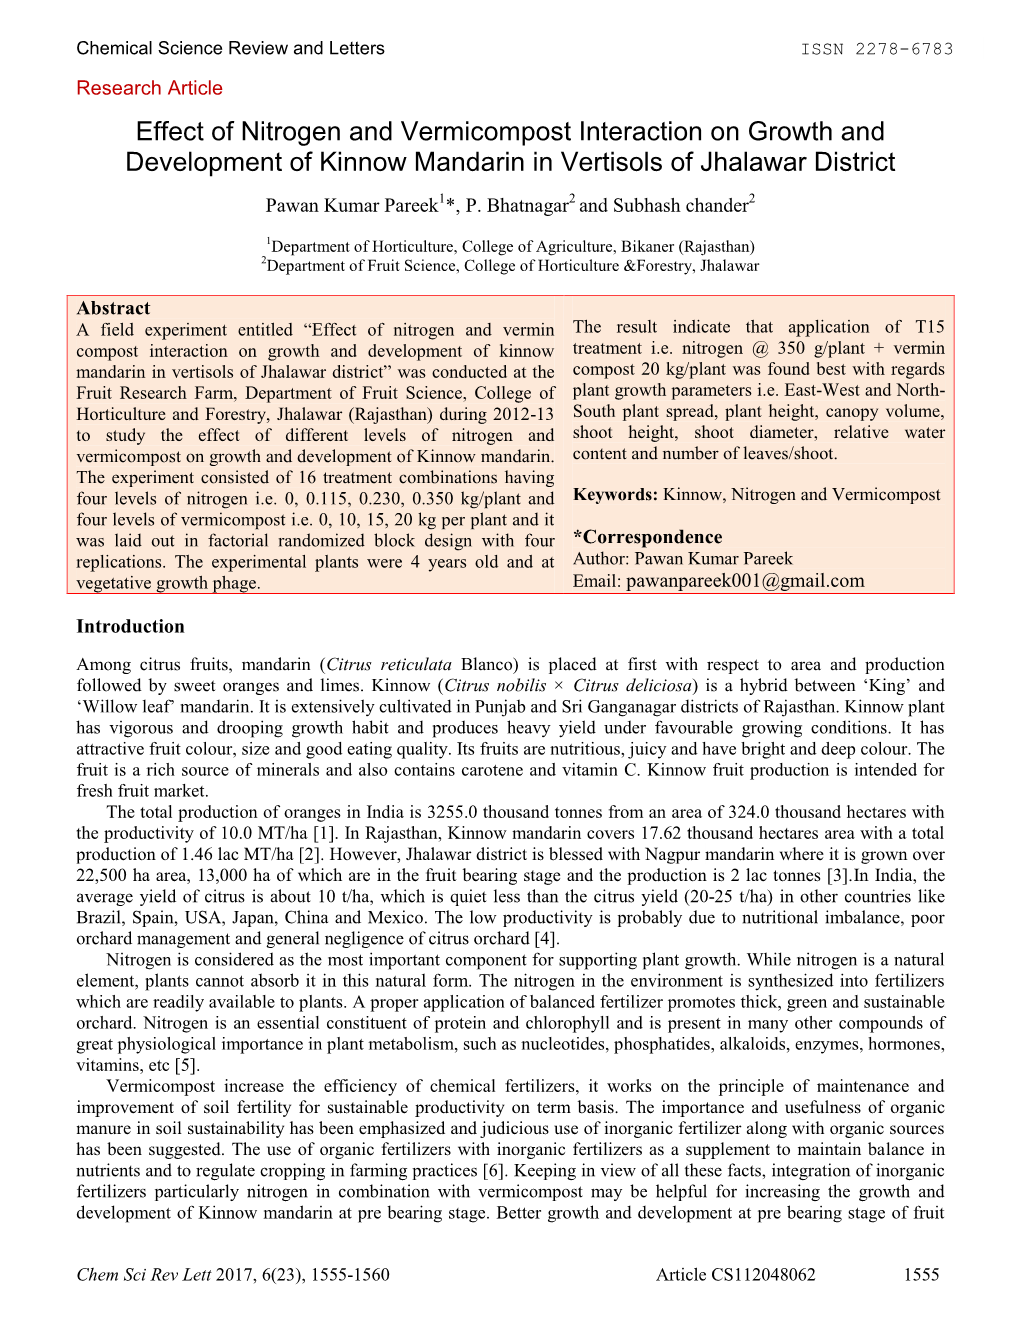 Effect of Nitrogen and Vermicompost Interaction on Growth and Development of Kinnow Mandarin in Vertisols of Jhalawar District Pawan Kumar Pareek1*, P